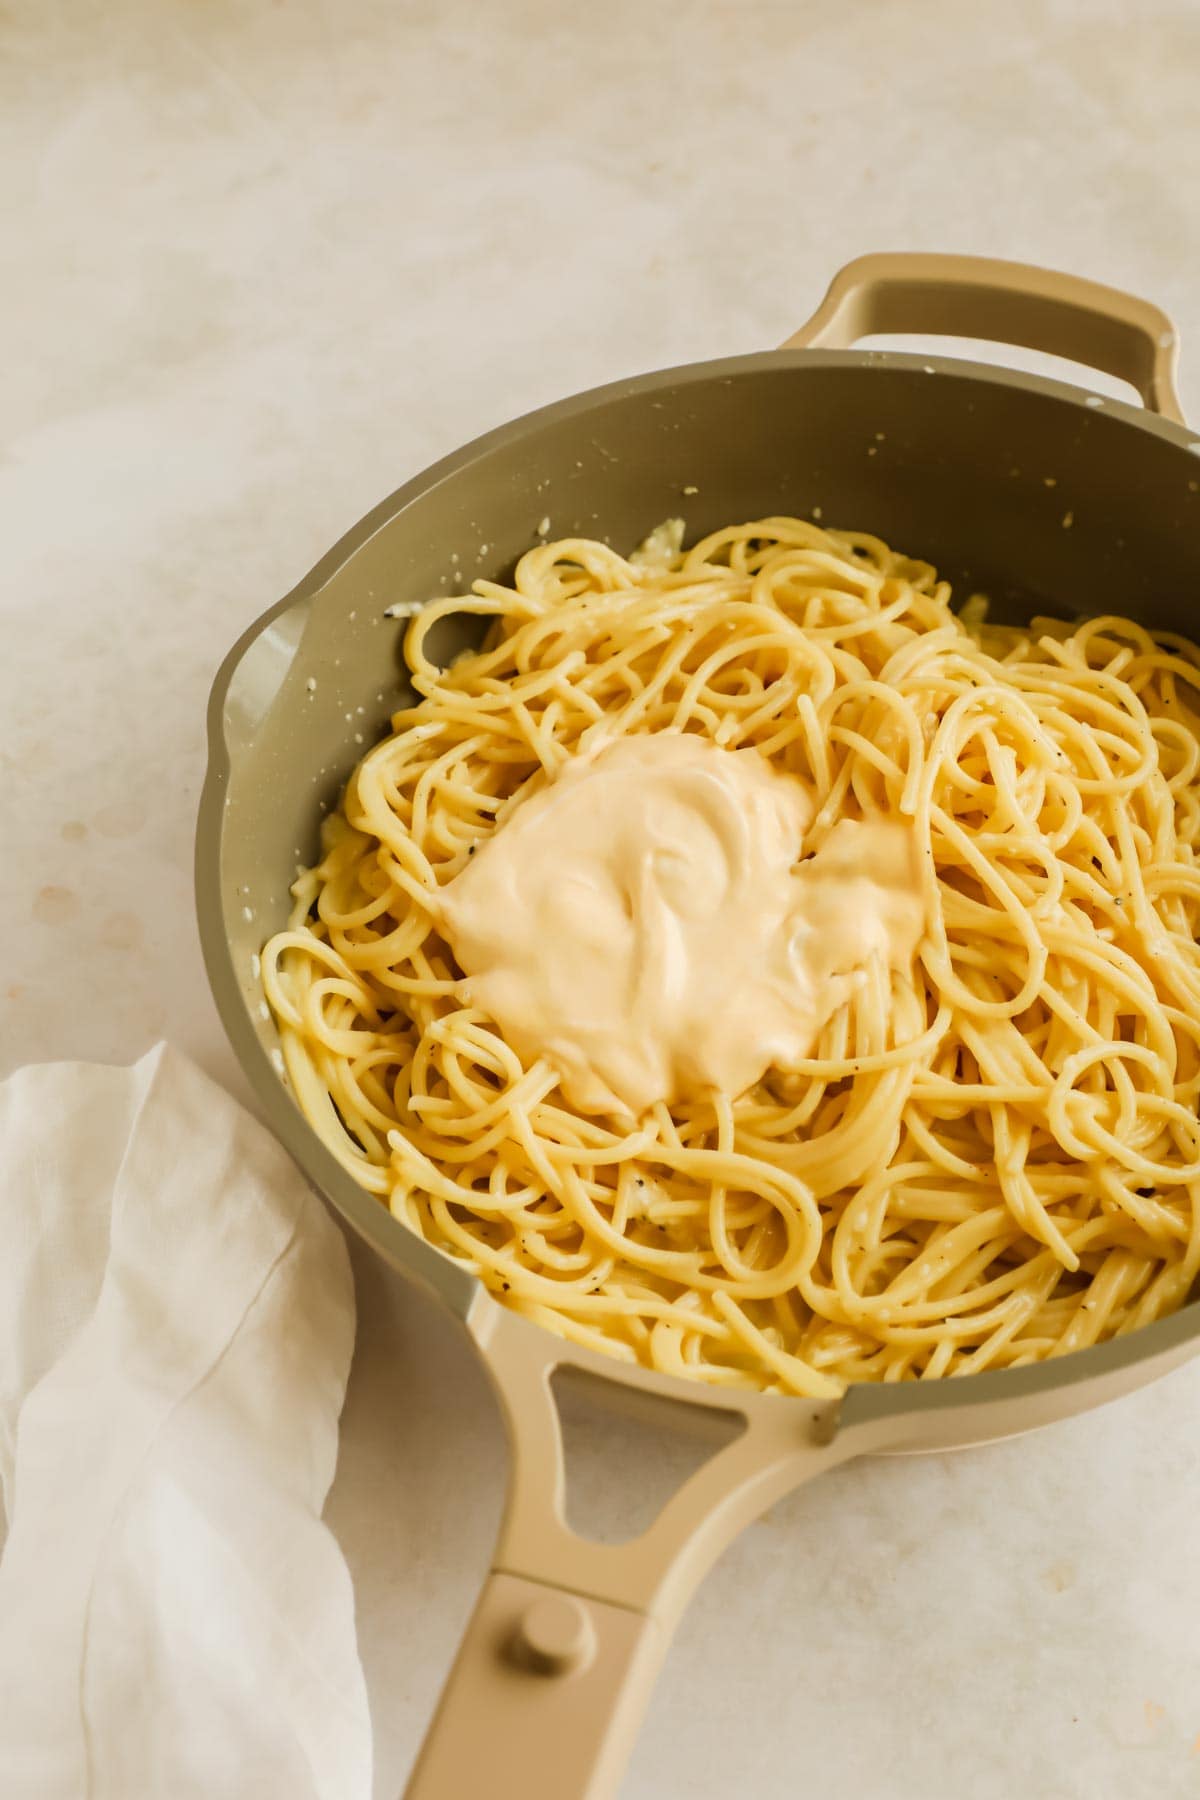 Sea urchin and creme fraiche cream on top of pasta in a pan